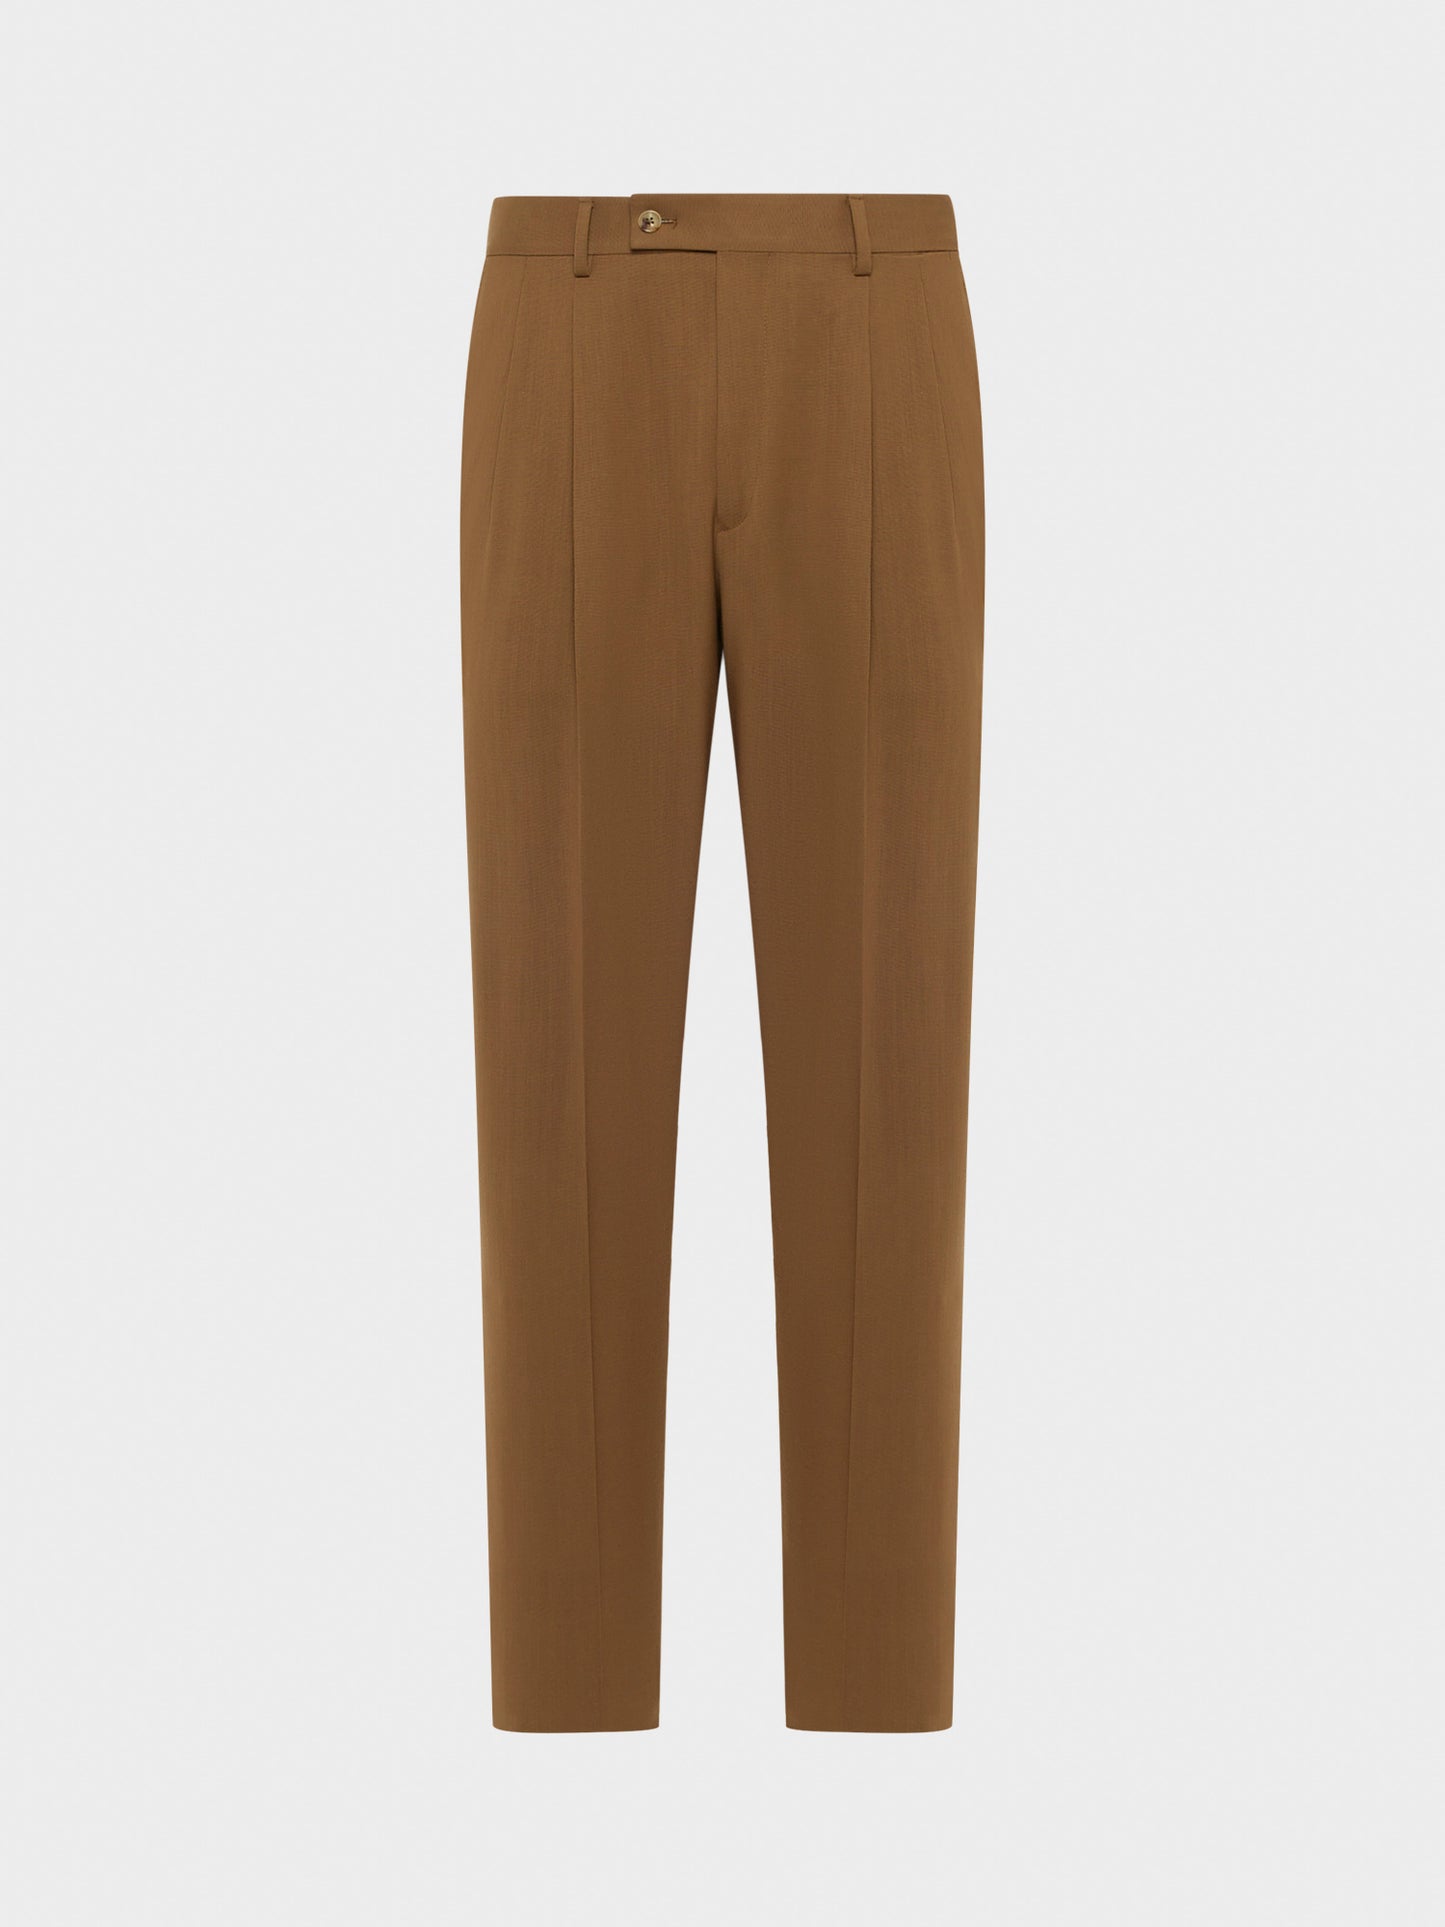 Brown "Houdini" tropical wool trousers